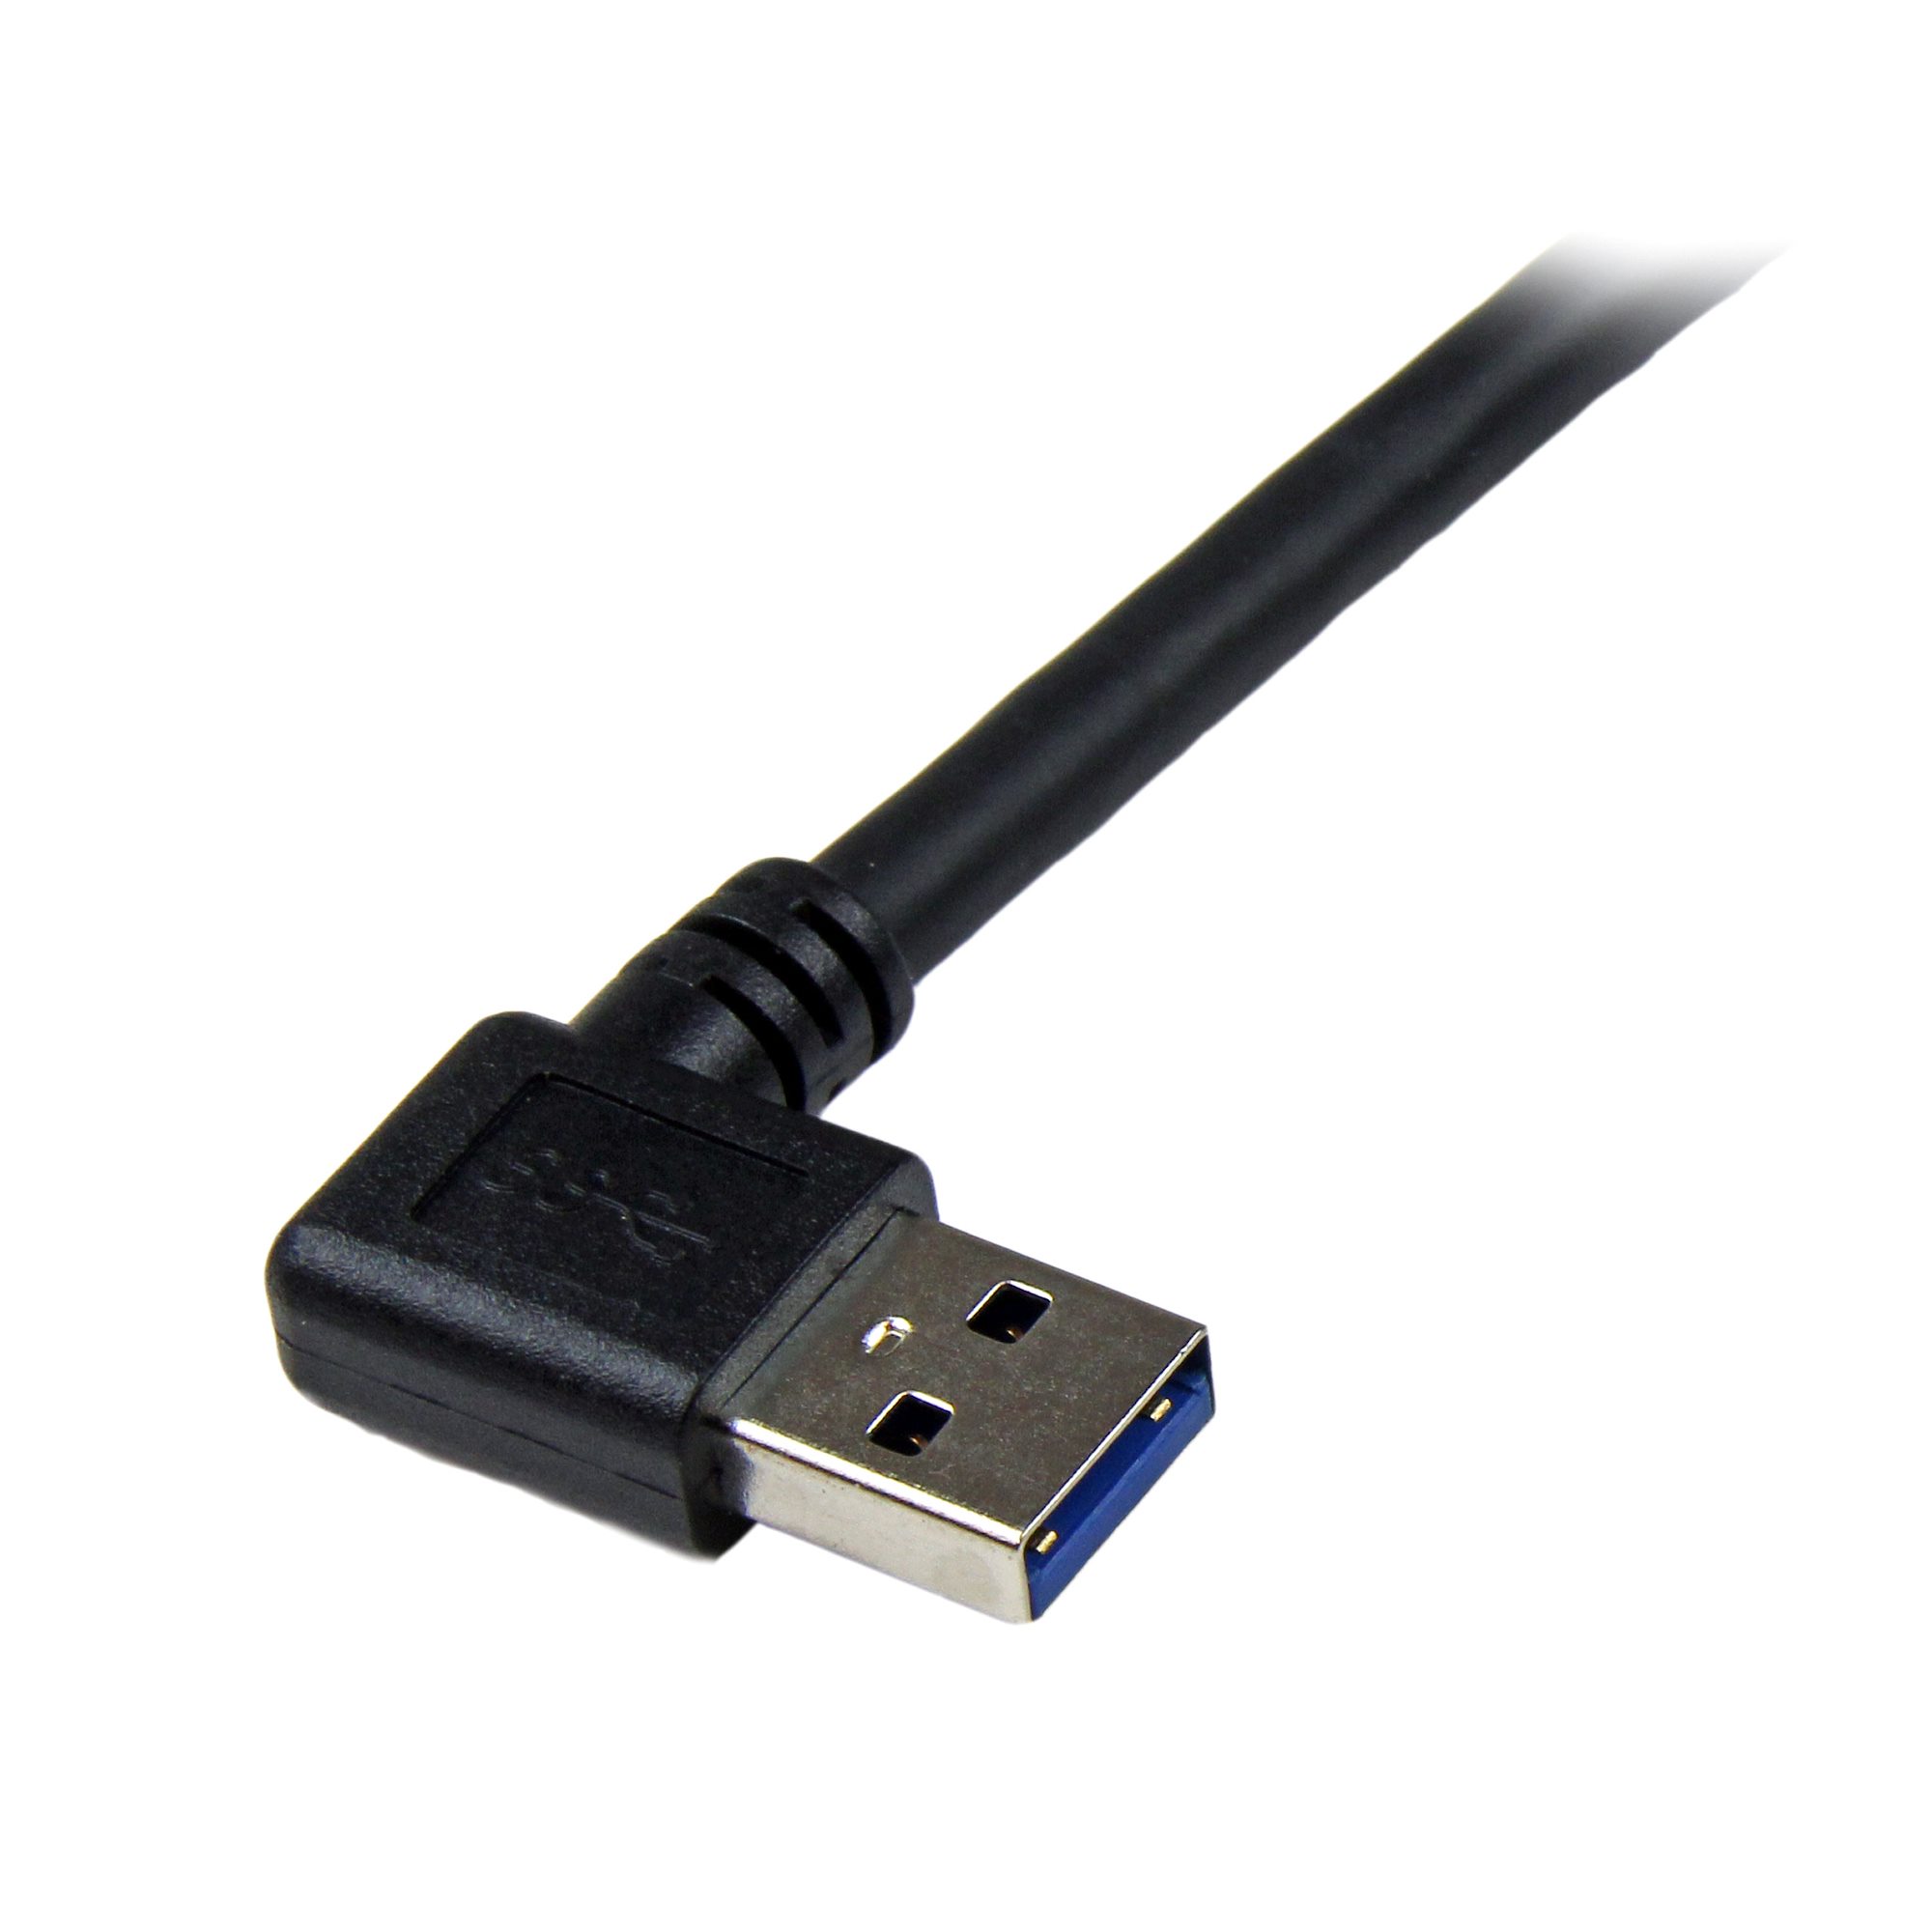 Usb 3.0 кабель питанием. Кабель USB 3.0 A-B загнутый. Кабель USB 3.0 Mini USB 3.0. Cable USB 3.0 10m. USB 3.0 right Angle.